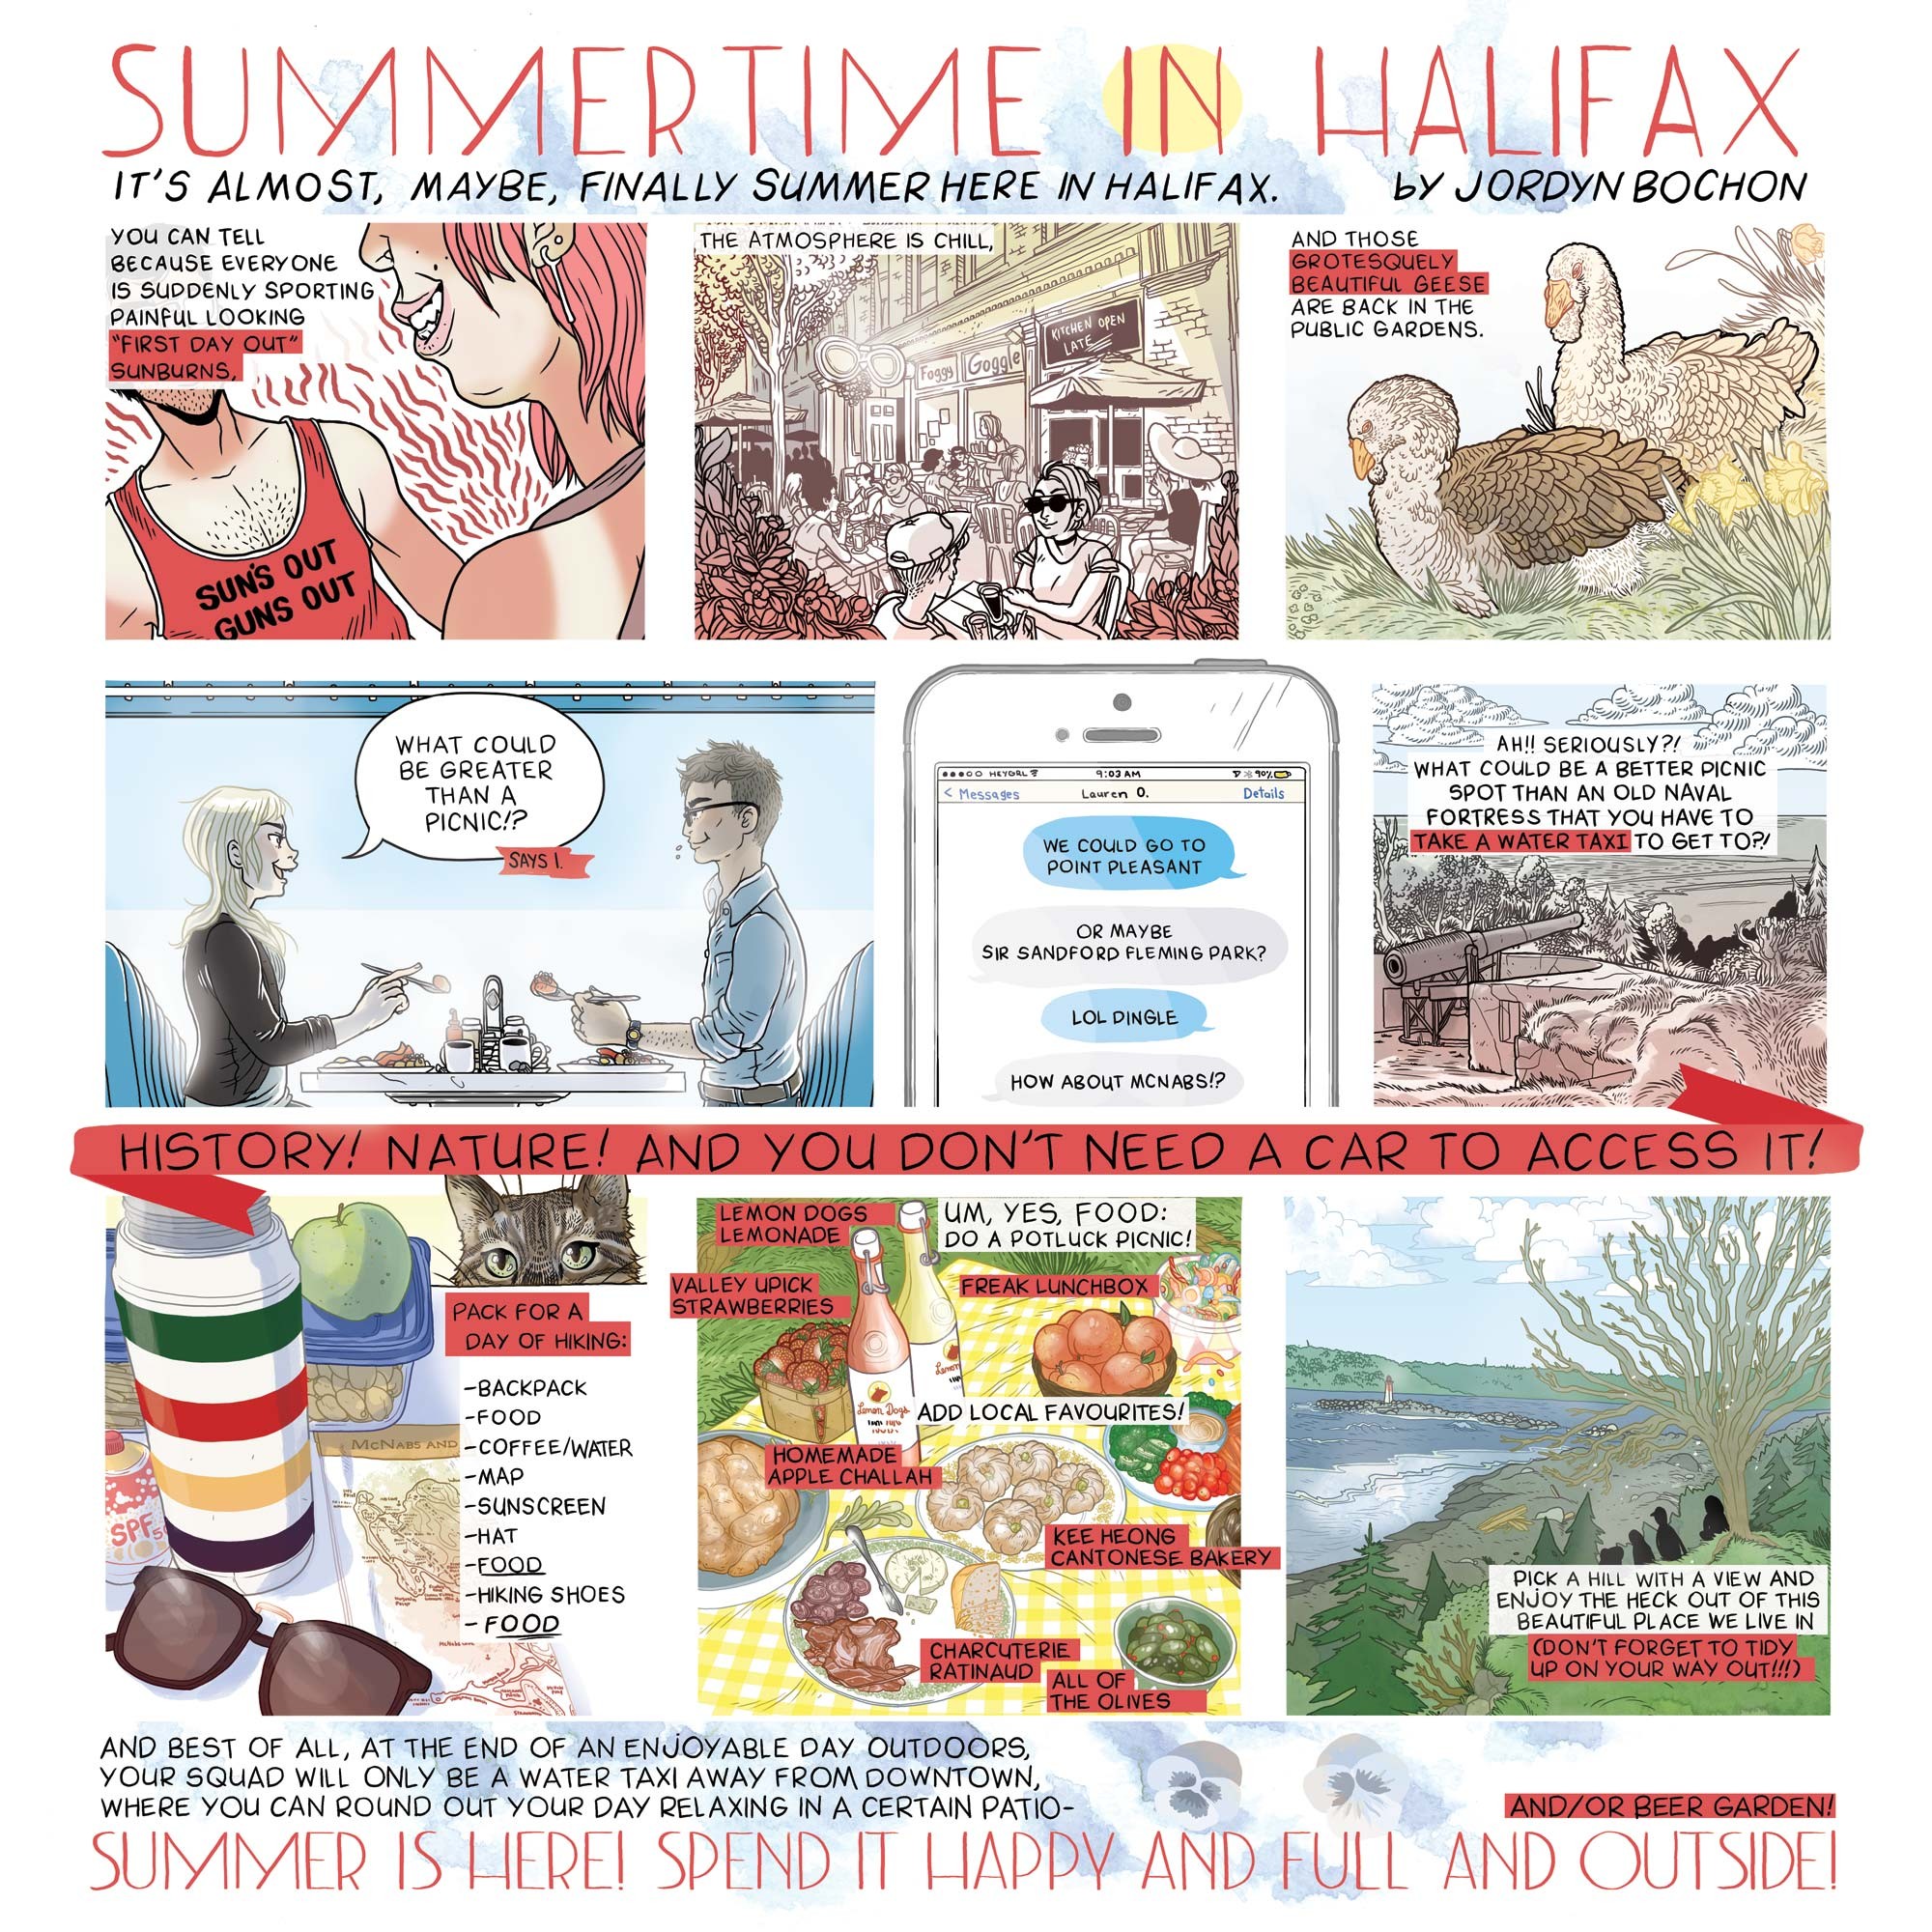 Summertime in Halifax